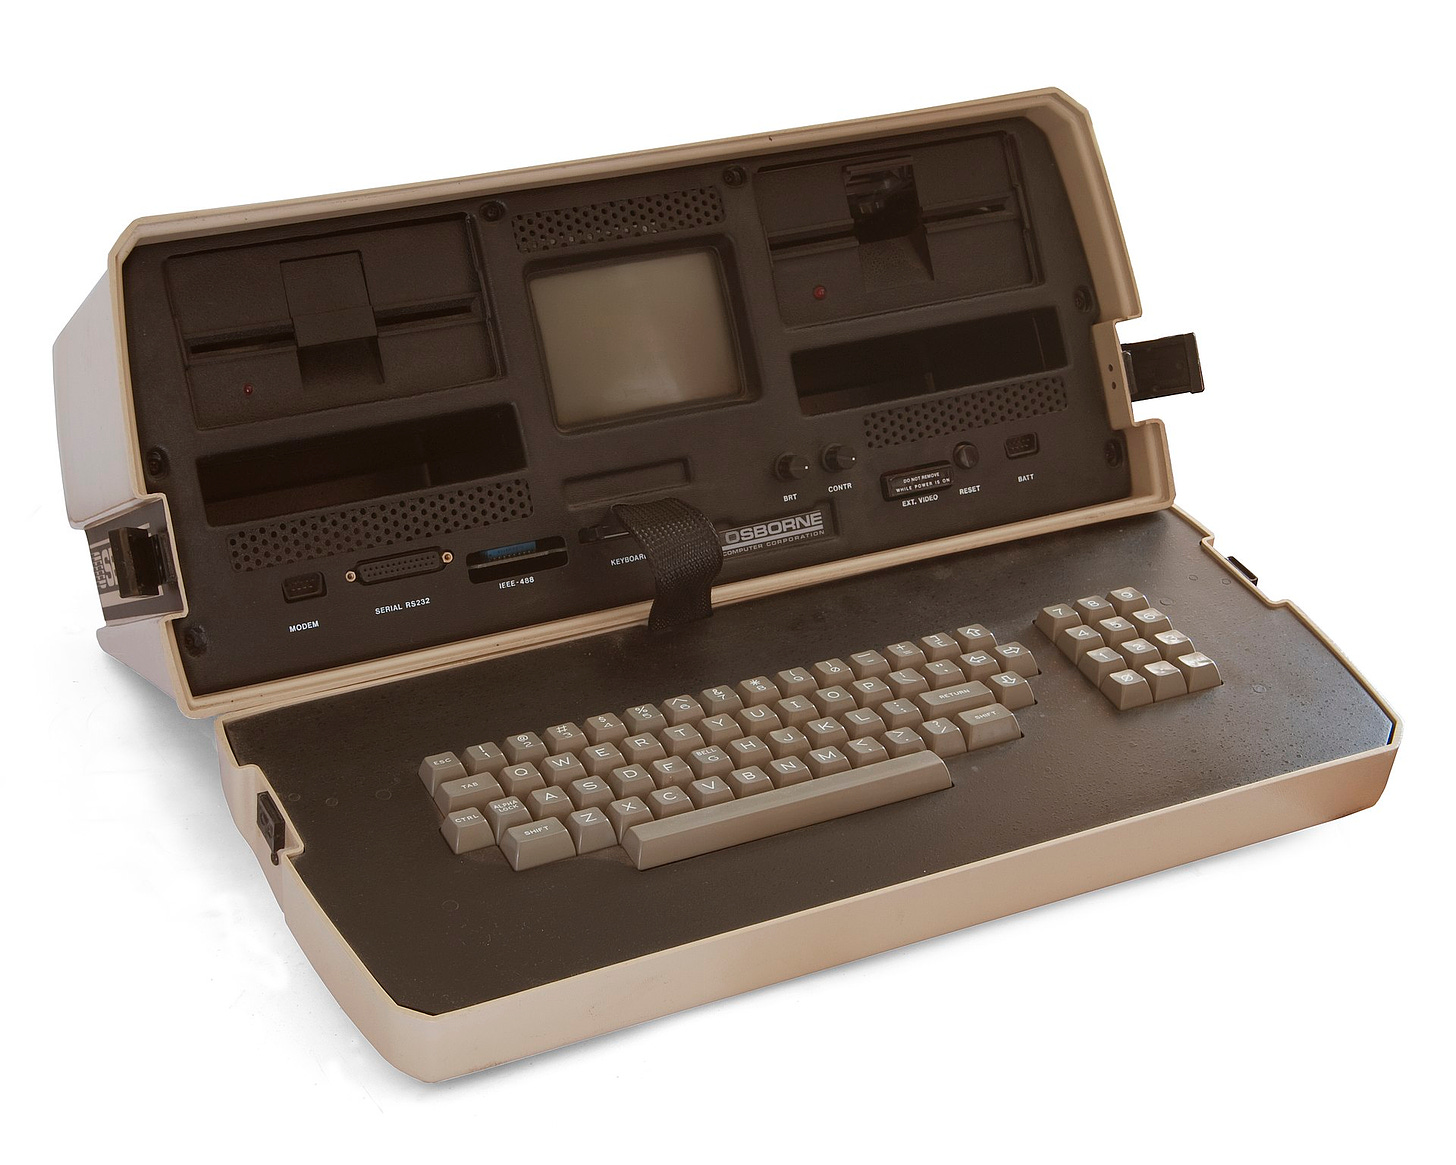 Photo of an Osborne I computer.